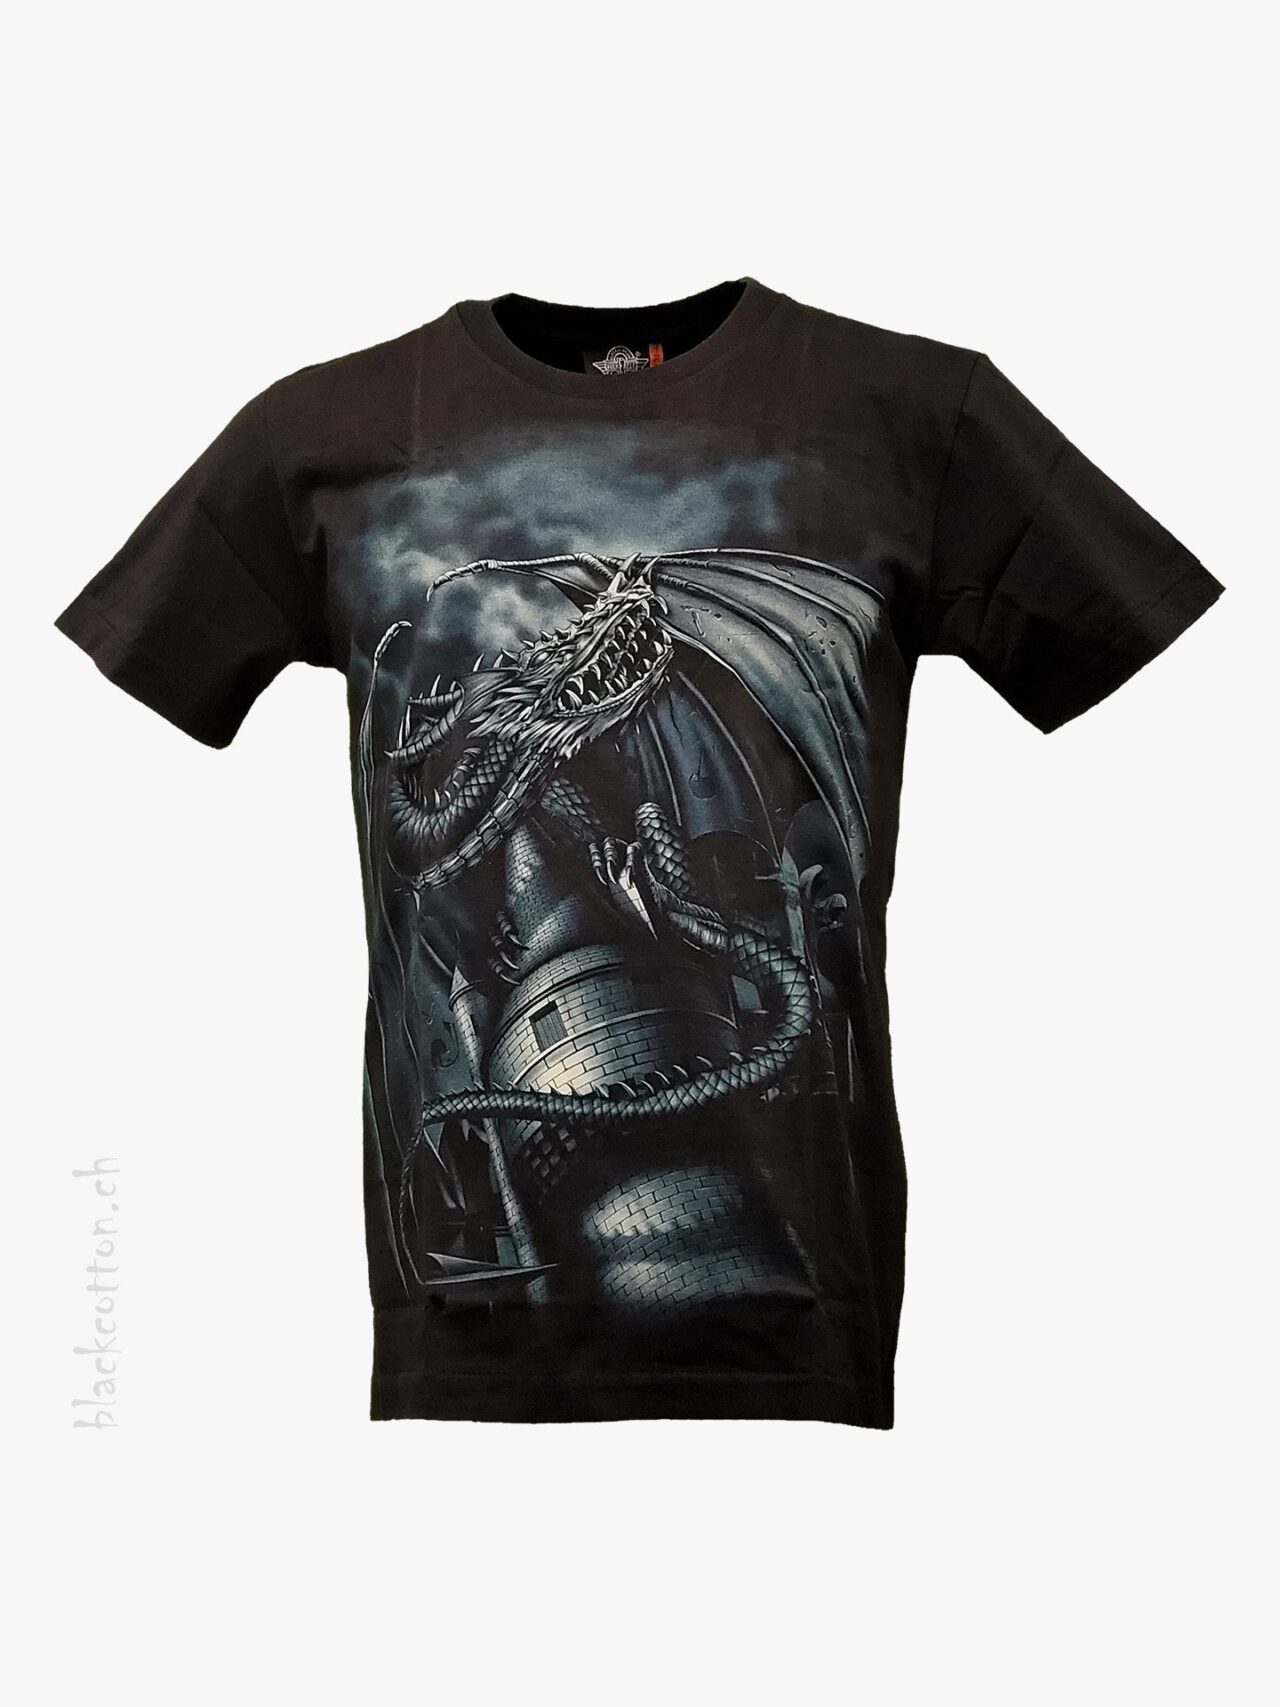 T-Shirt Drache Bergfried Glow-in-the-Dark ROCK EAGLE